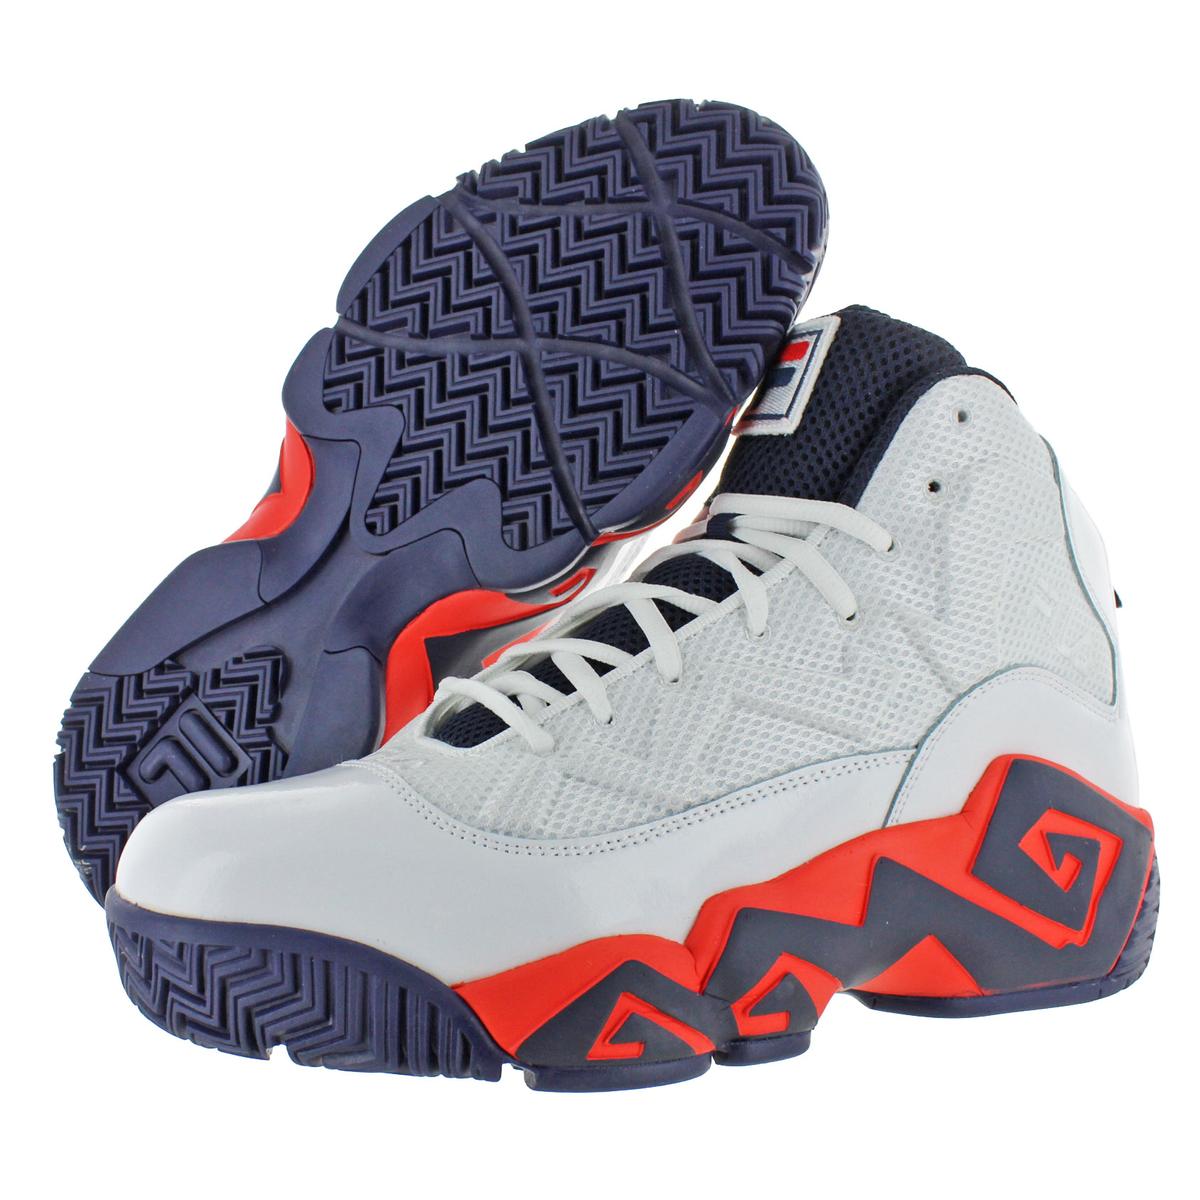 Fila Men's MB Jamal Mashburn Retro Basketball Sneakers Shoes | eBay